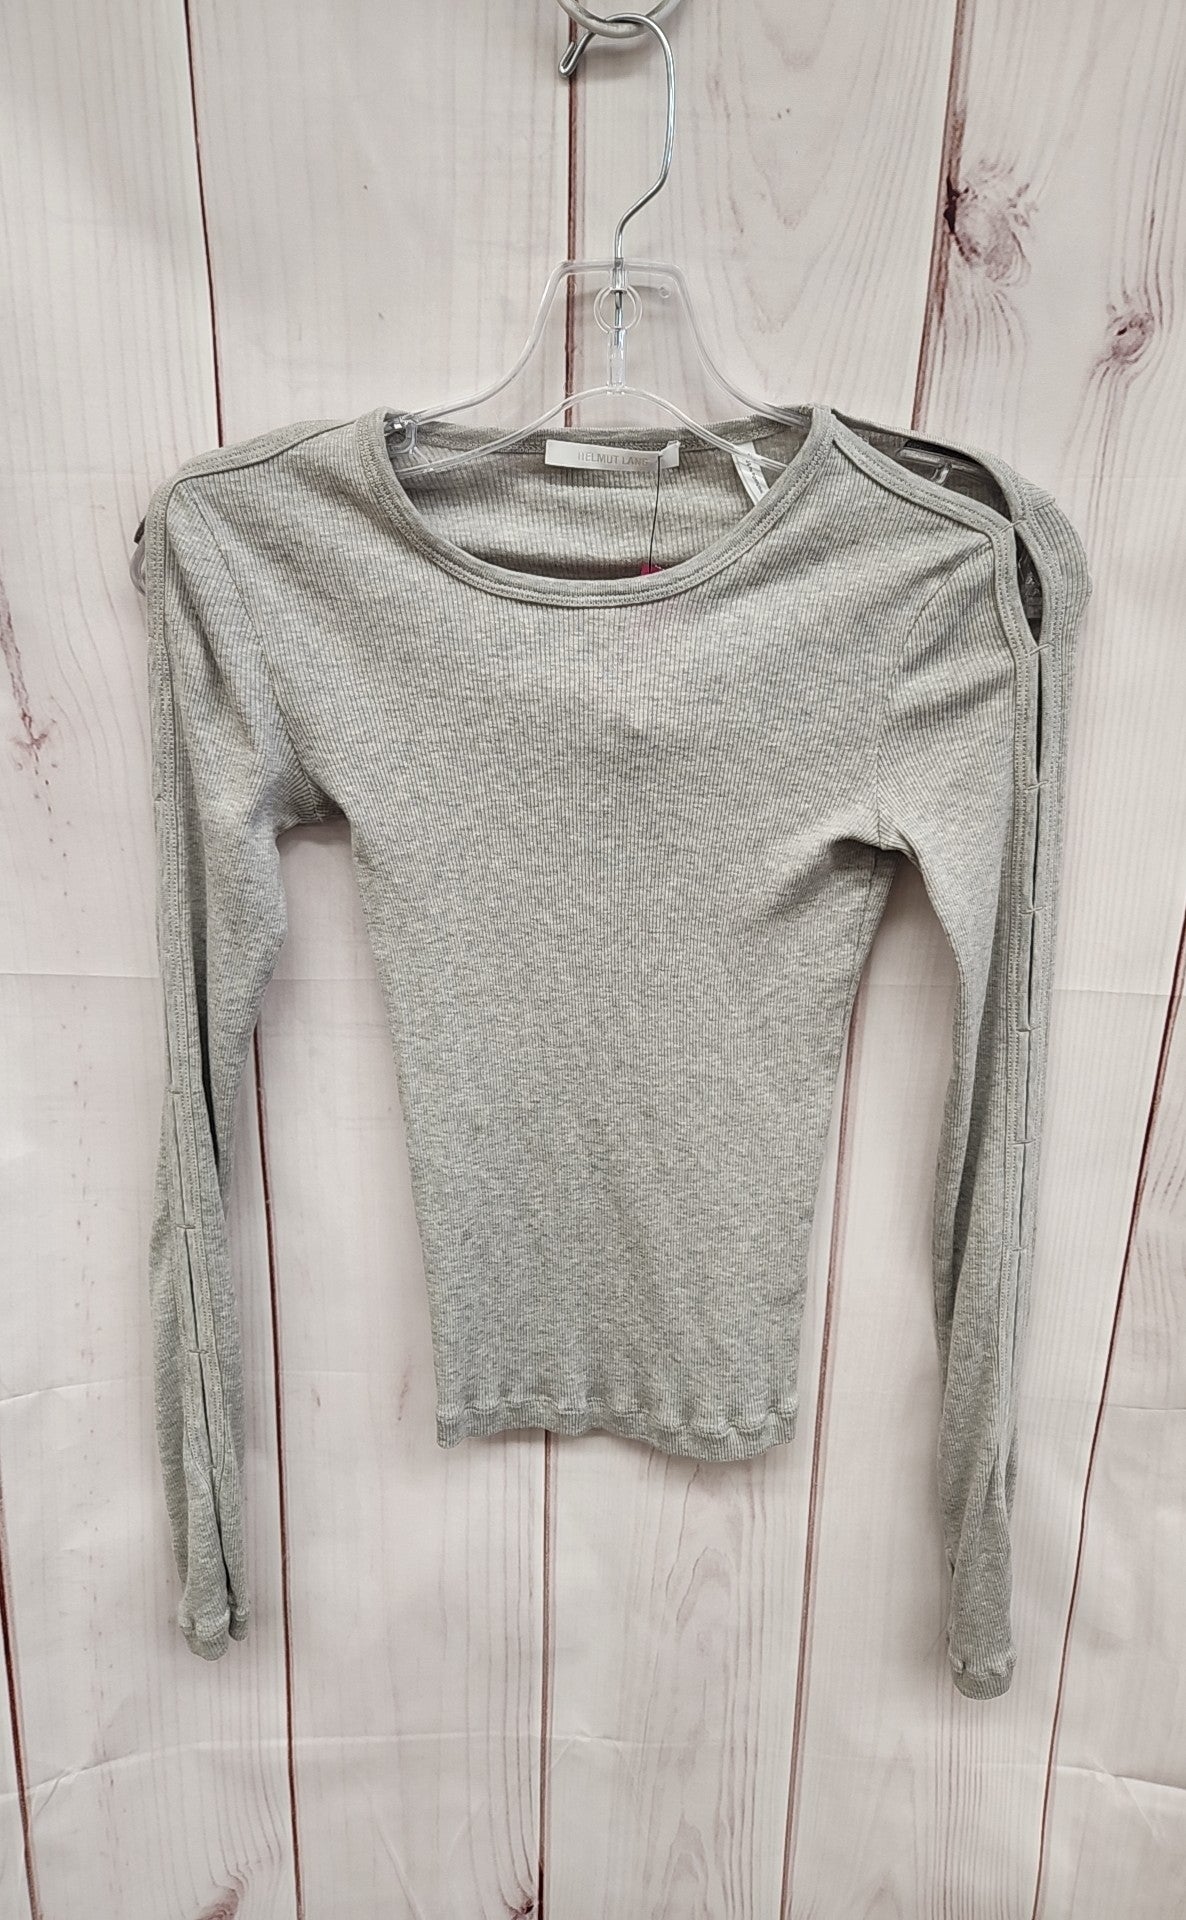 Helmut Lang Women's Size S Gray Long Sleeve Top